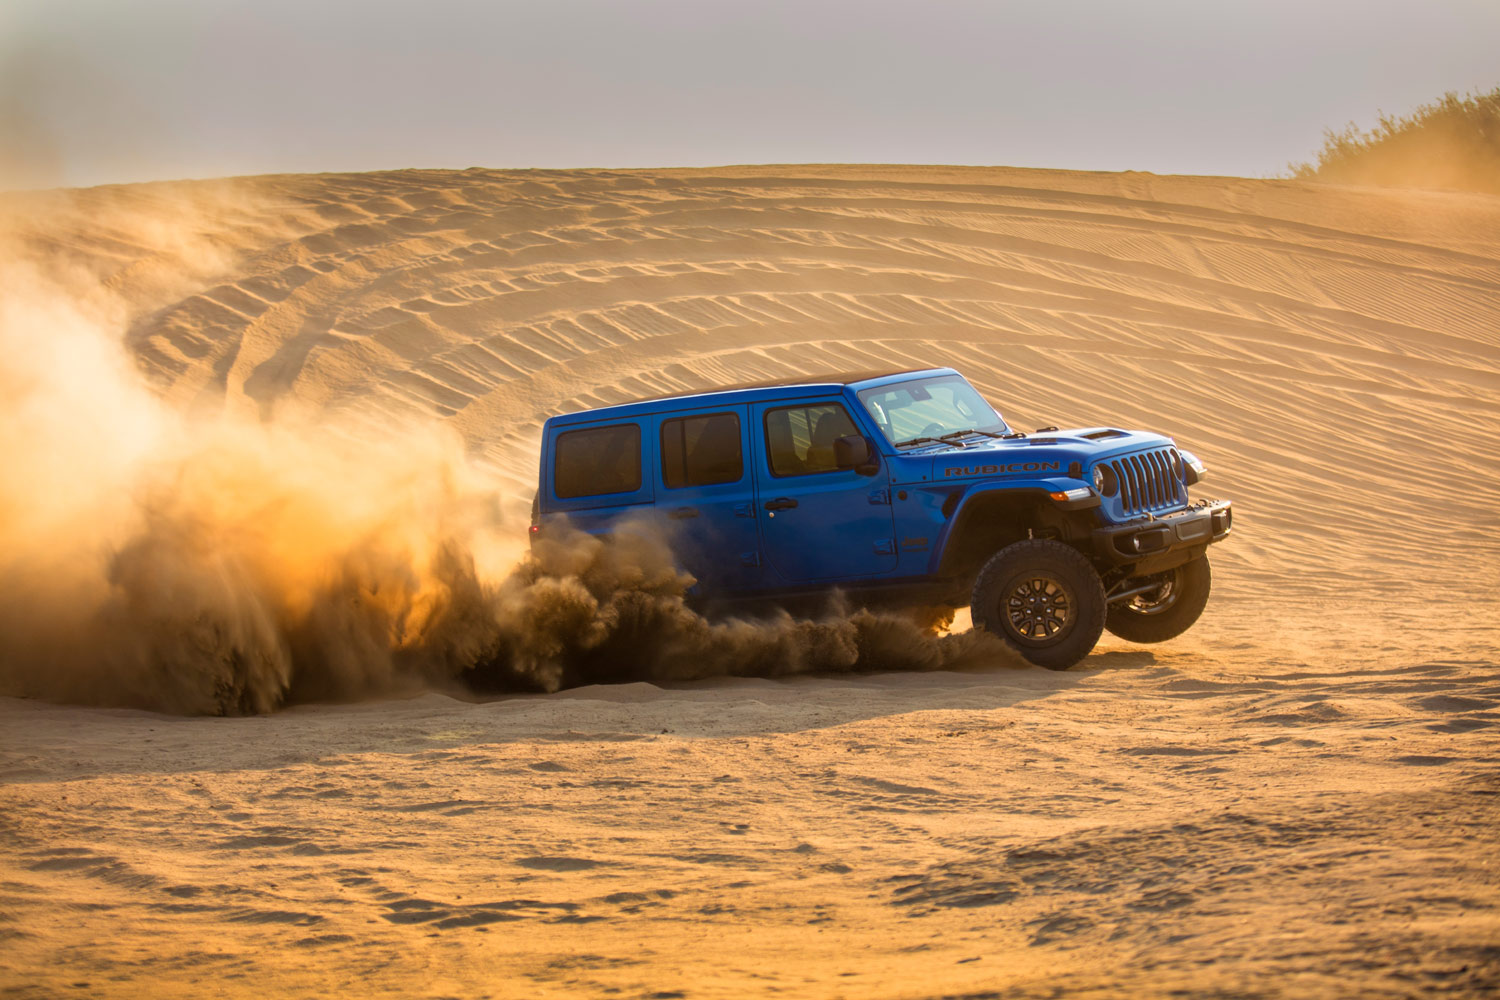 Blue 2022 Jeep Wrangler Rubicon 392 drives in the desert